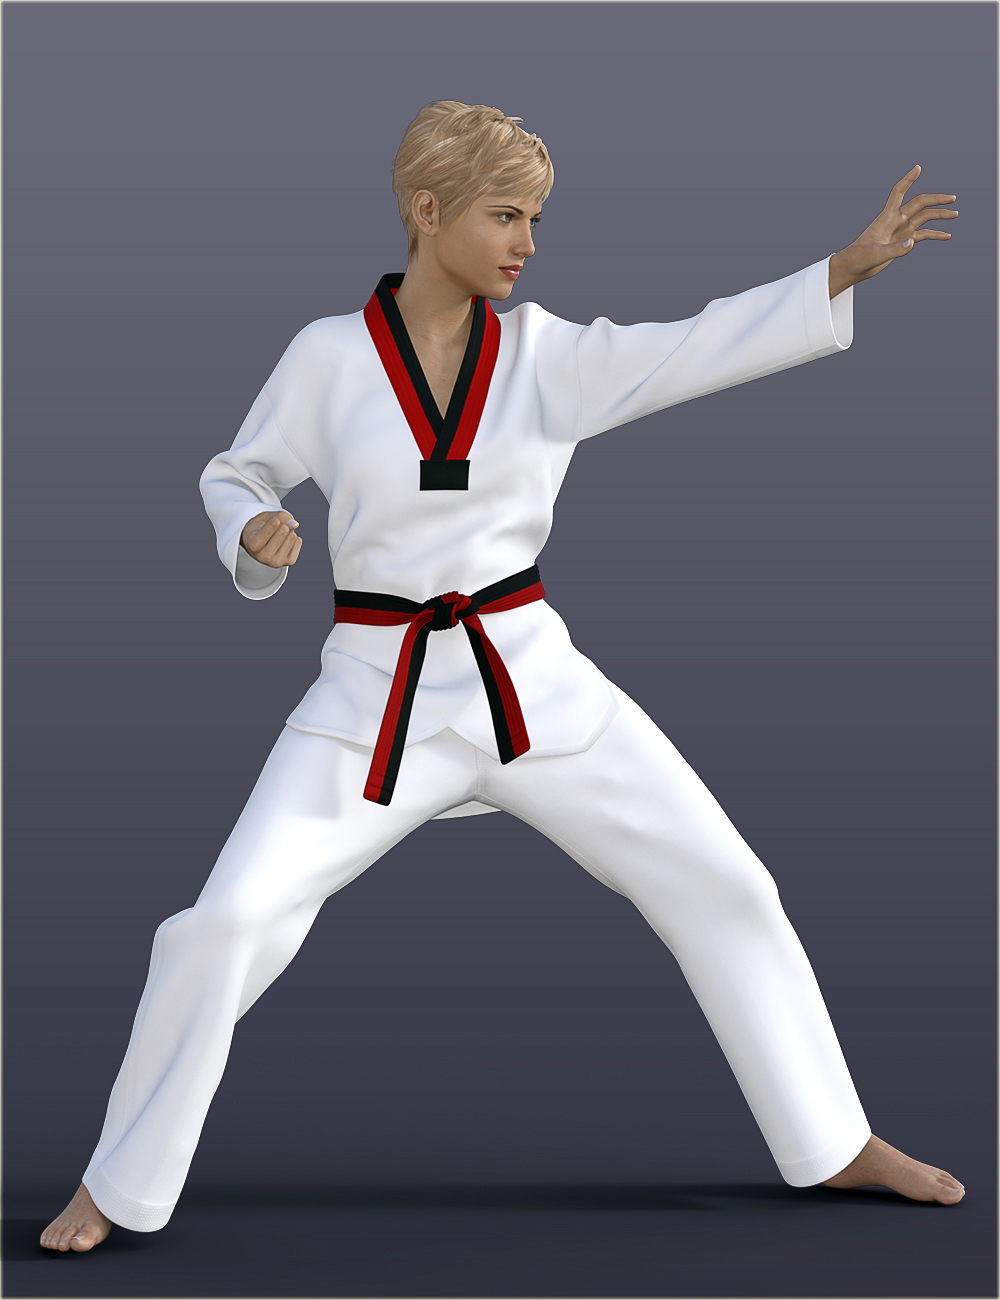 dForce H&C Taekwondo Suit for Genesis 8 Female(s) by: IH Kang, 3D Models by Daz 3D